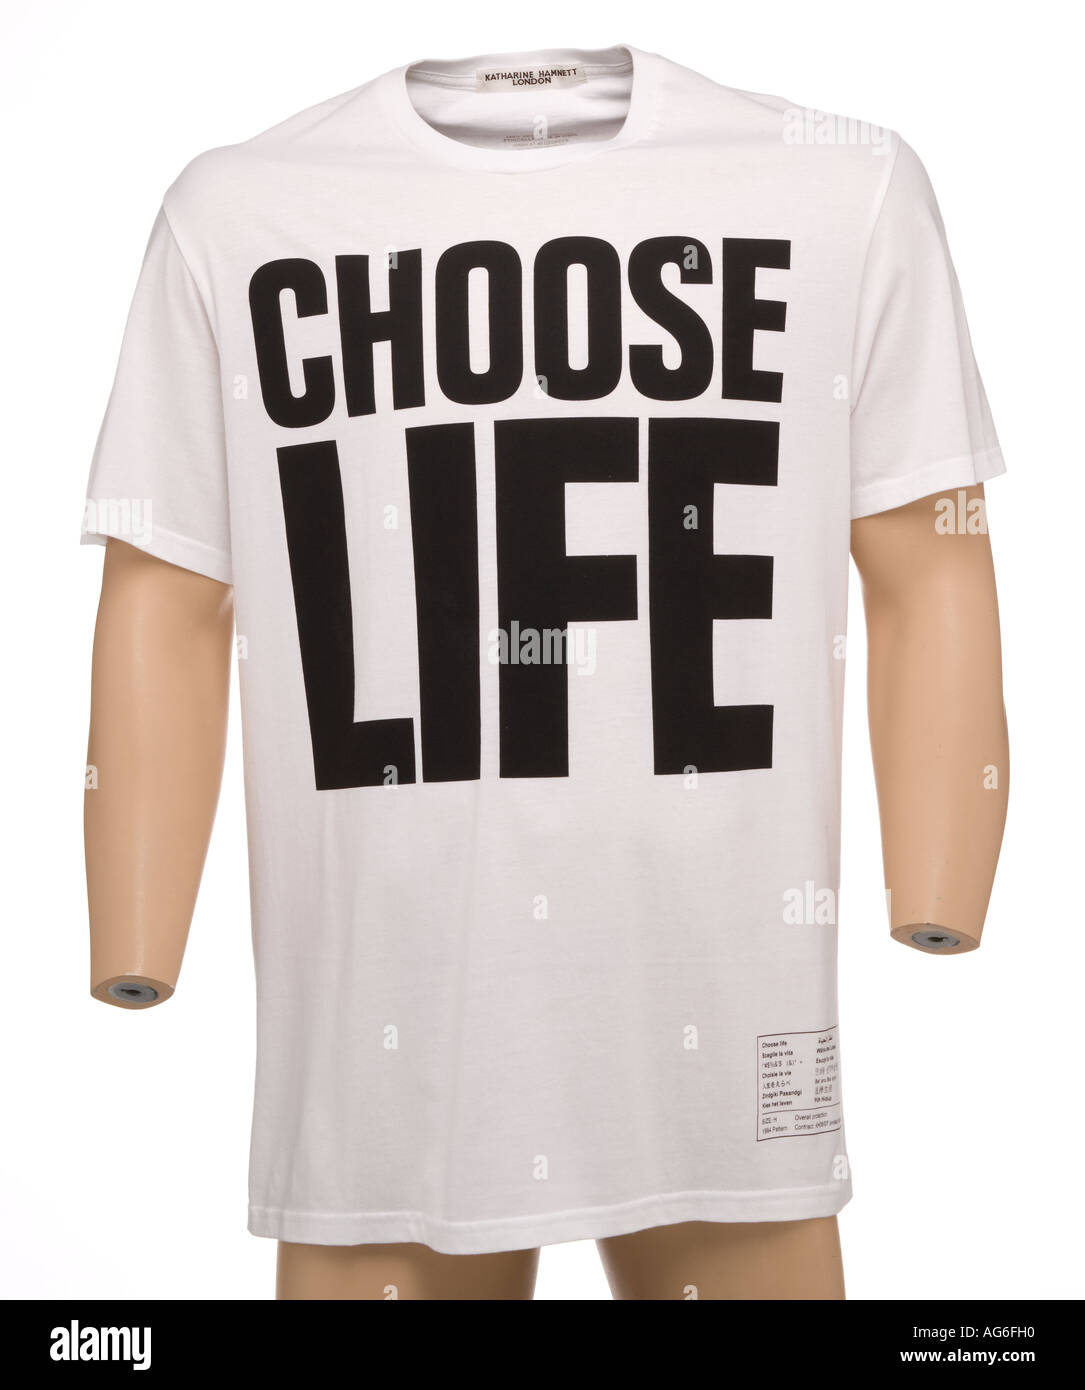 Choose life t-shirt Stock Photo